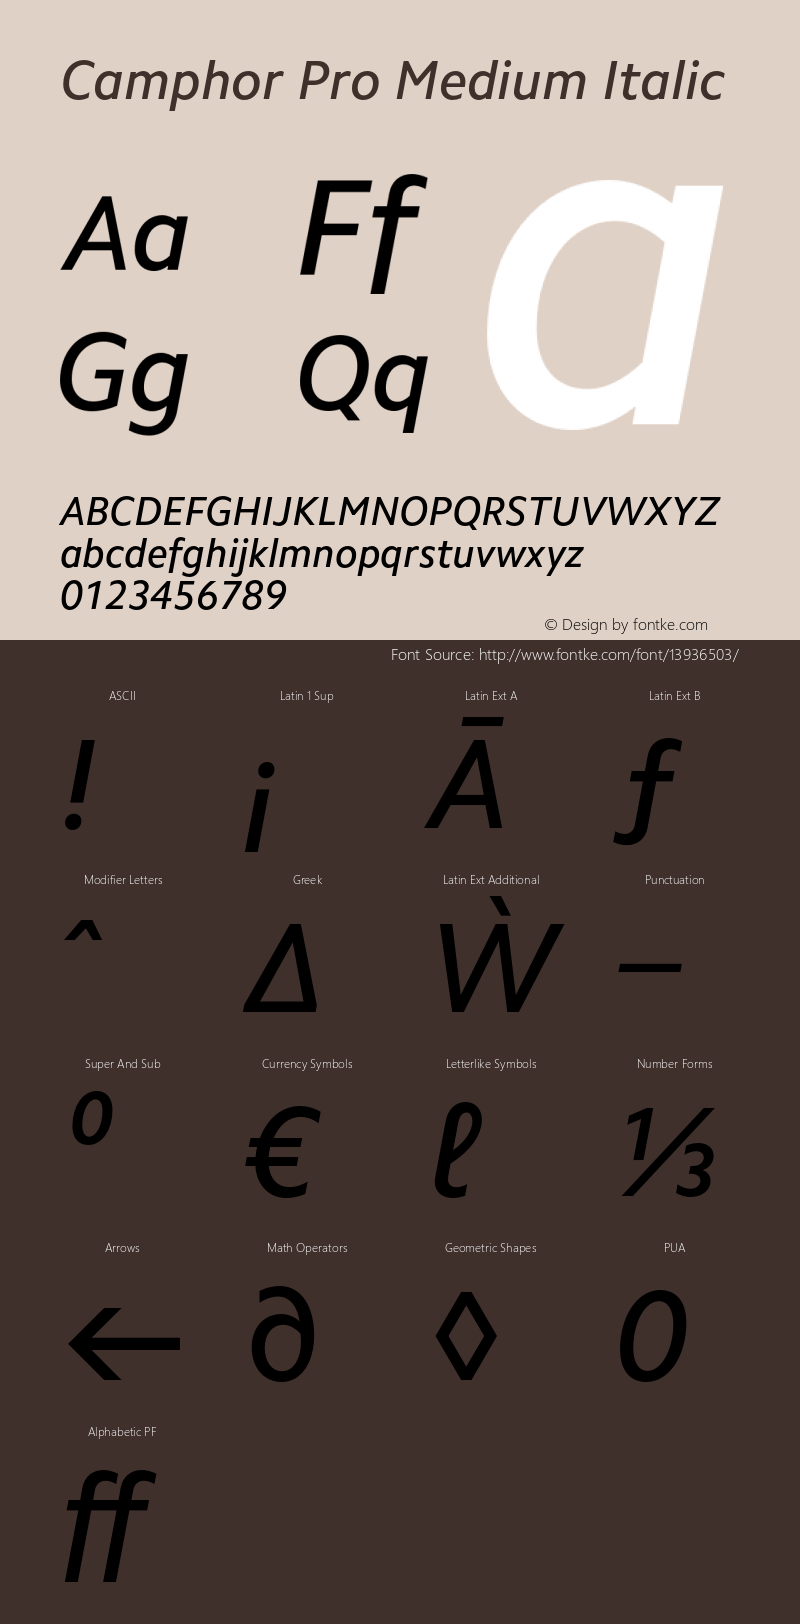 Camphor Pro Medium Italic Version 1.100 Font Sample